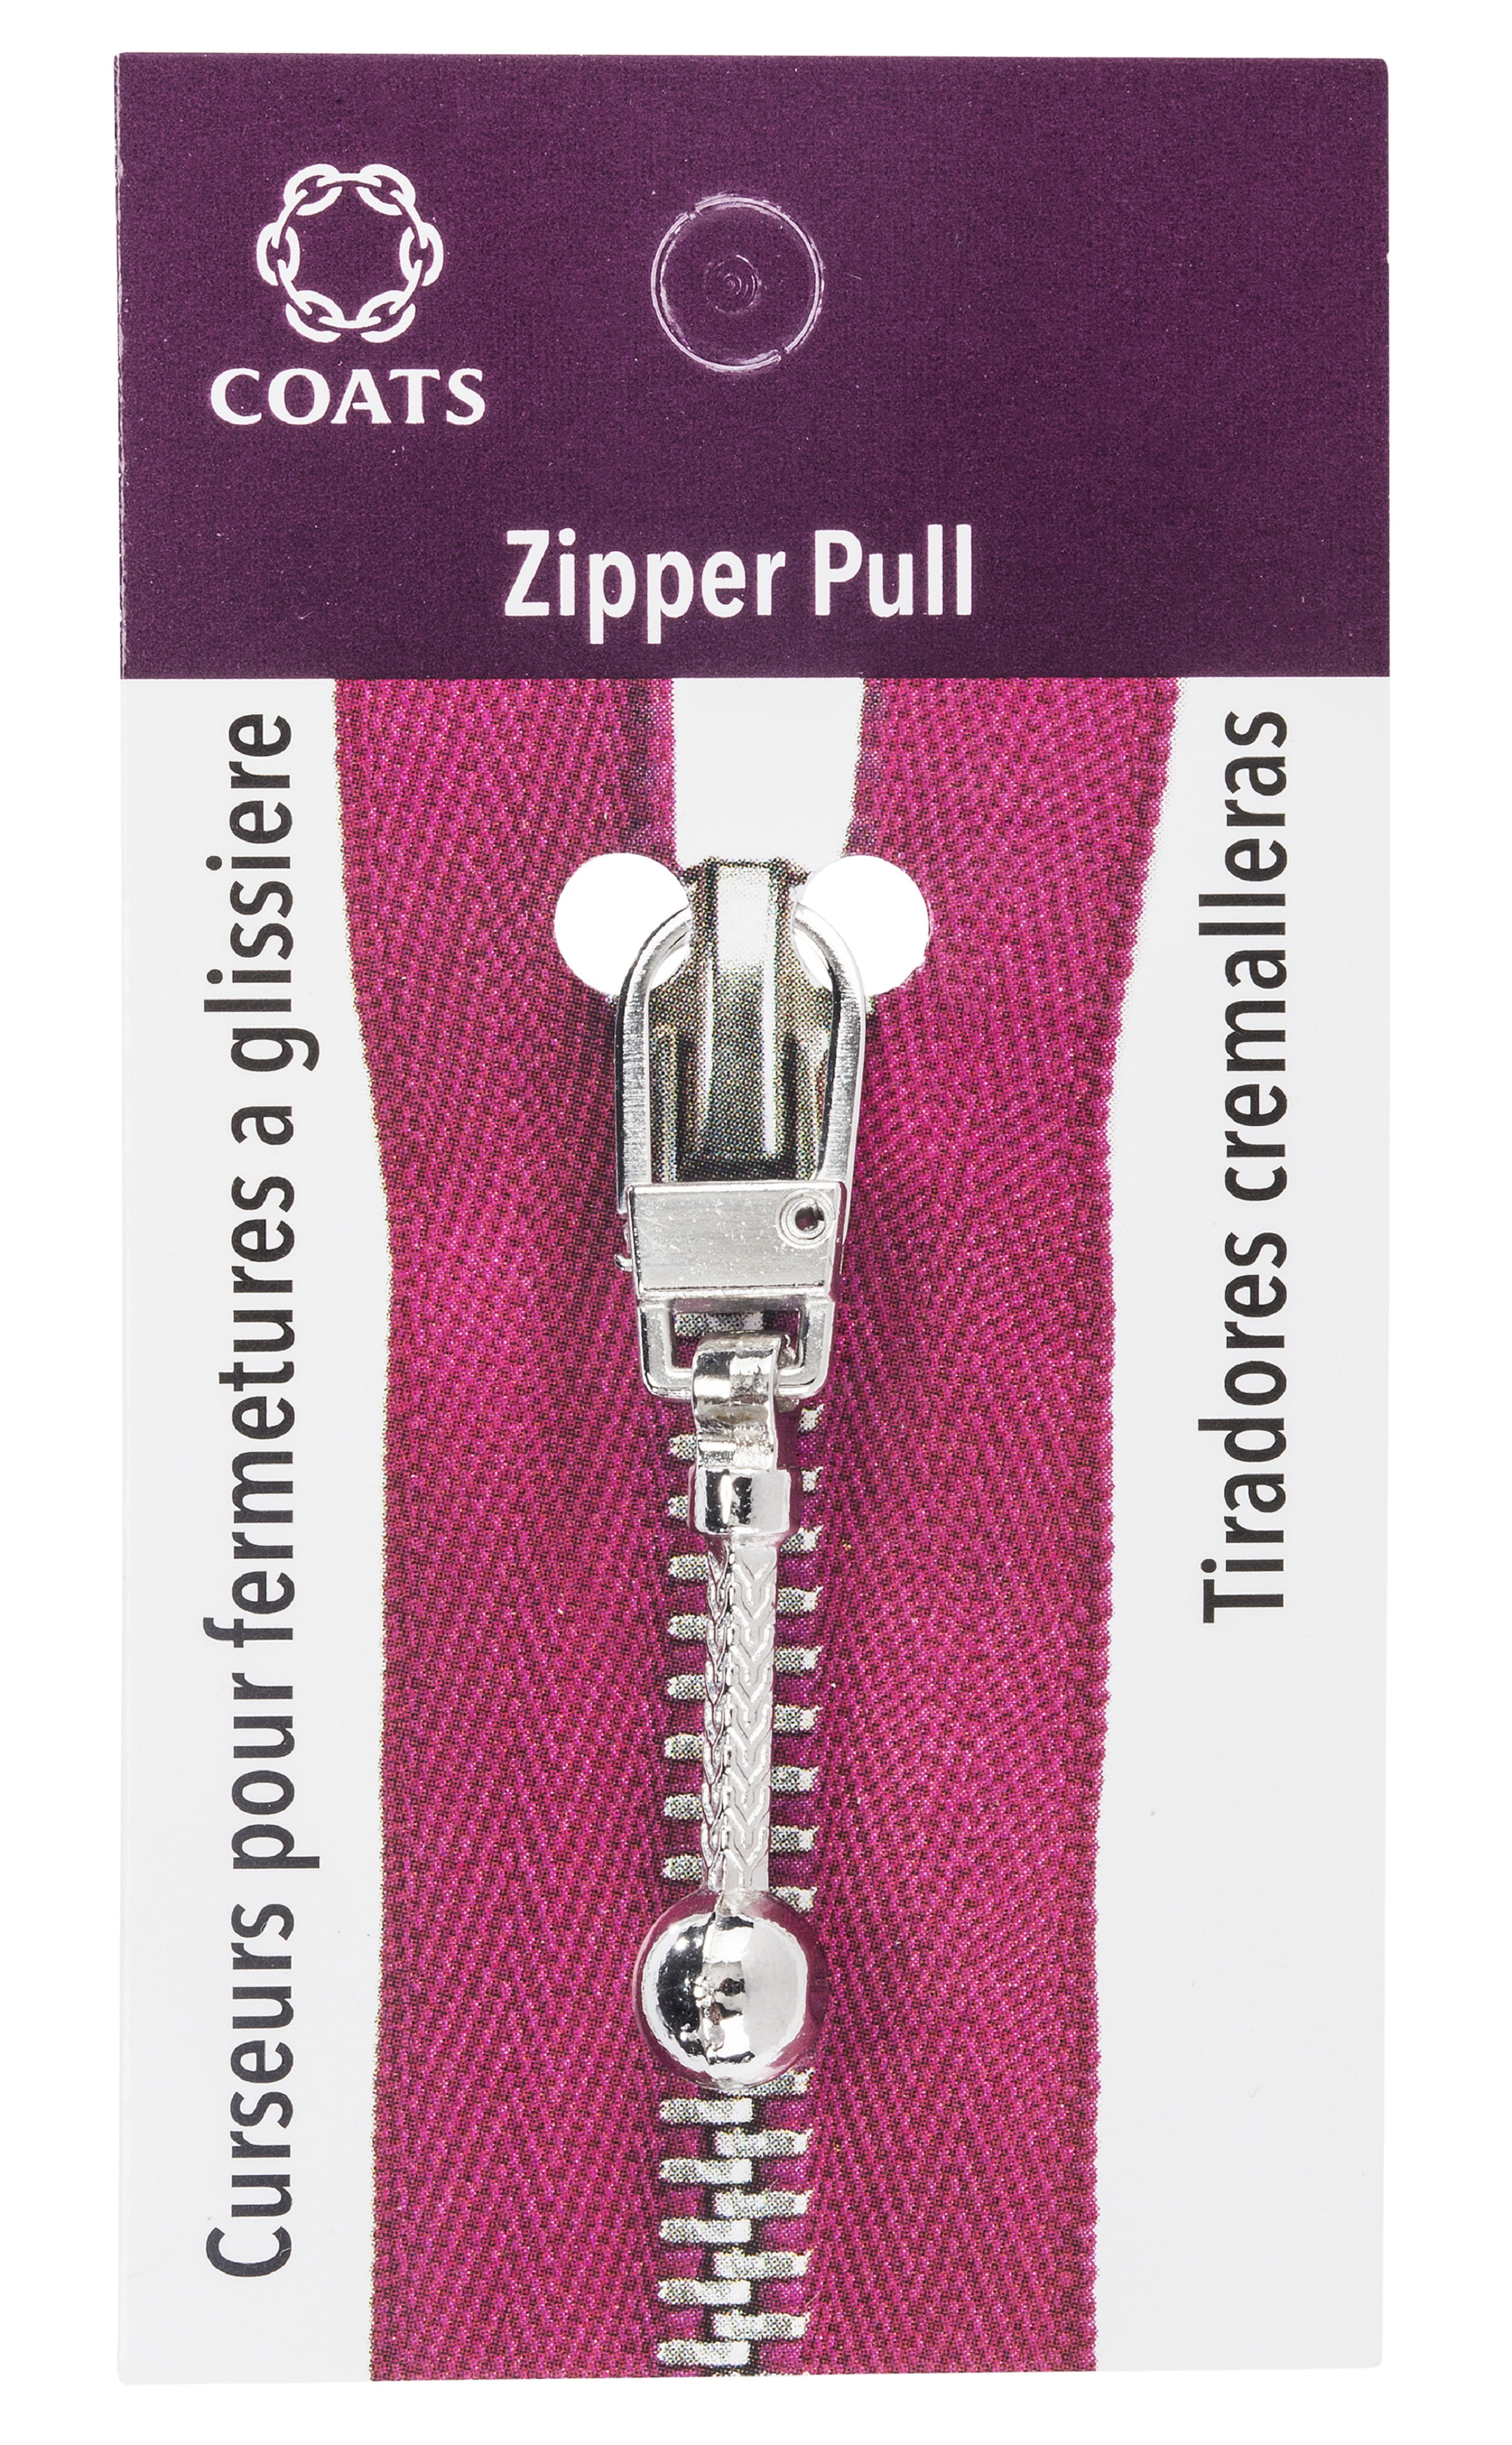  TEHAUX 10Pcs Zipper Helper Pull for Dresses Boot Charms Zipper  Repair kit Zipper Pull Zipper Slider Replacement Boot Puller Zipper Parts  Drop Suite Accessories Small Hole Metal Clothing